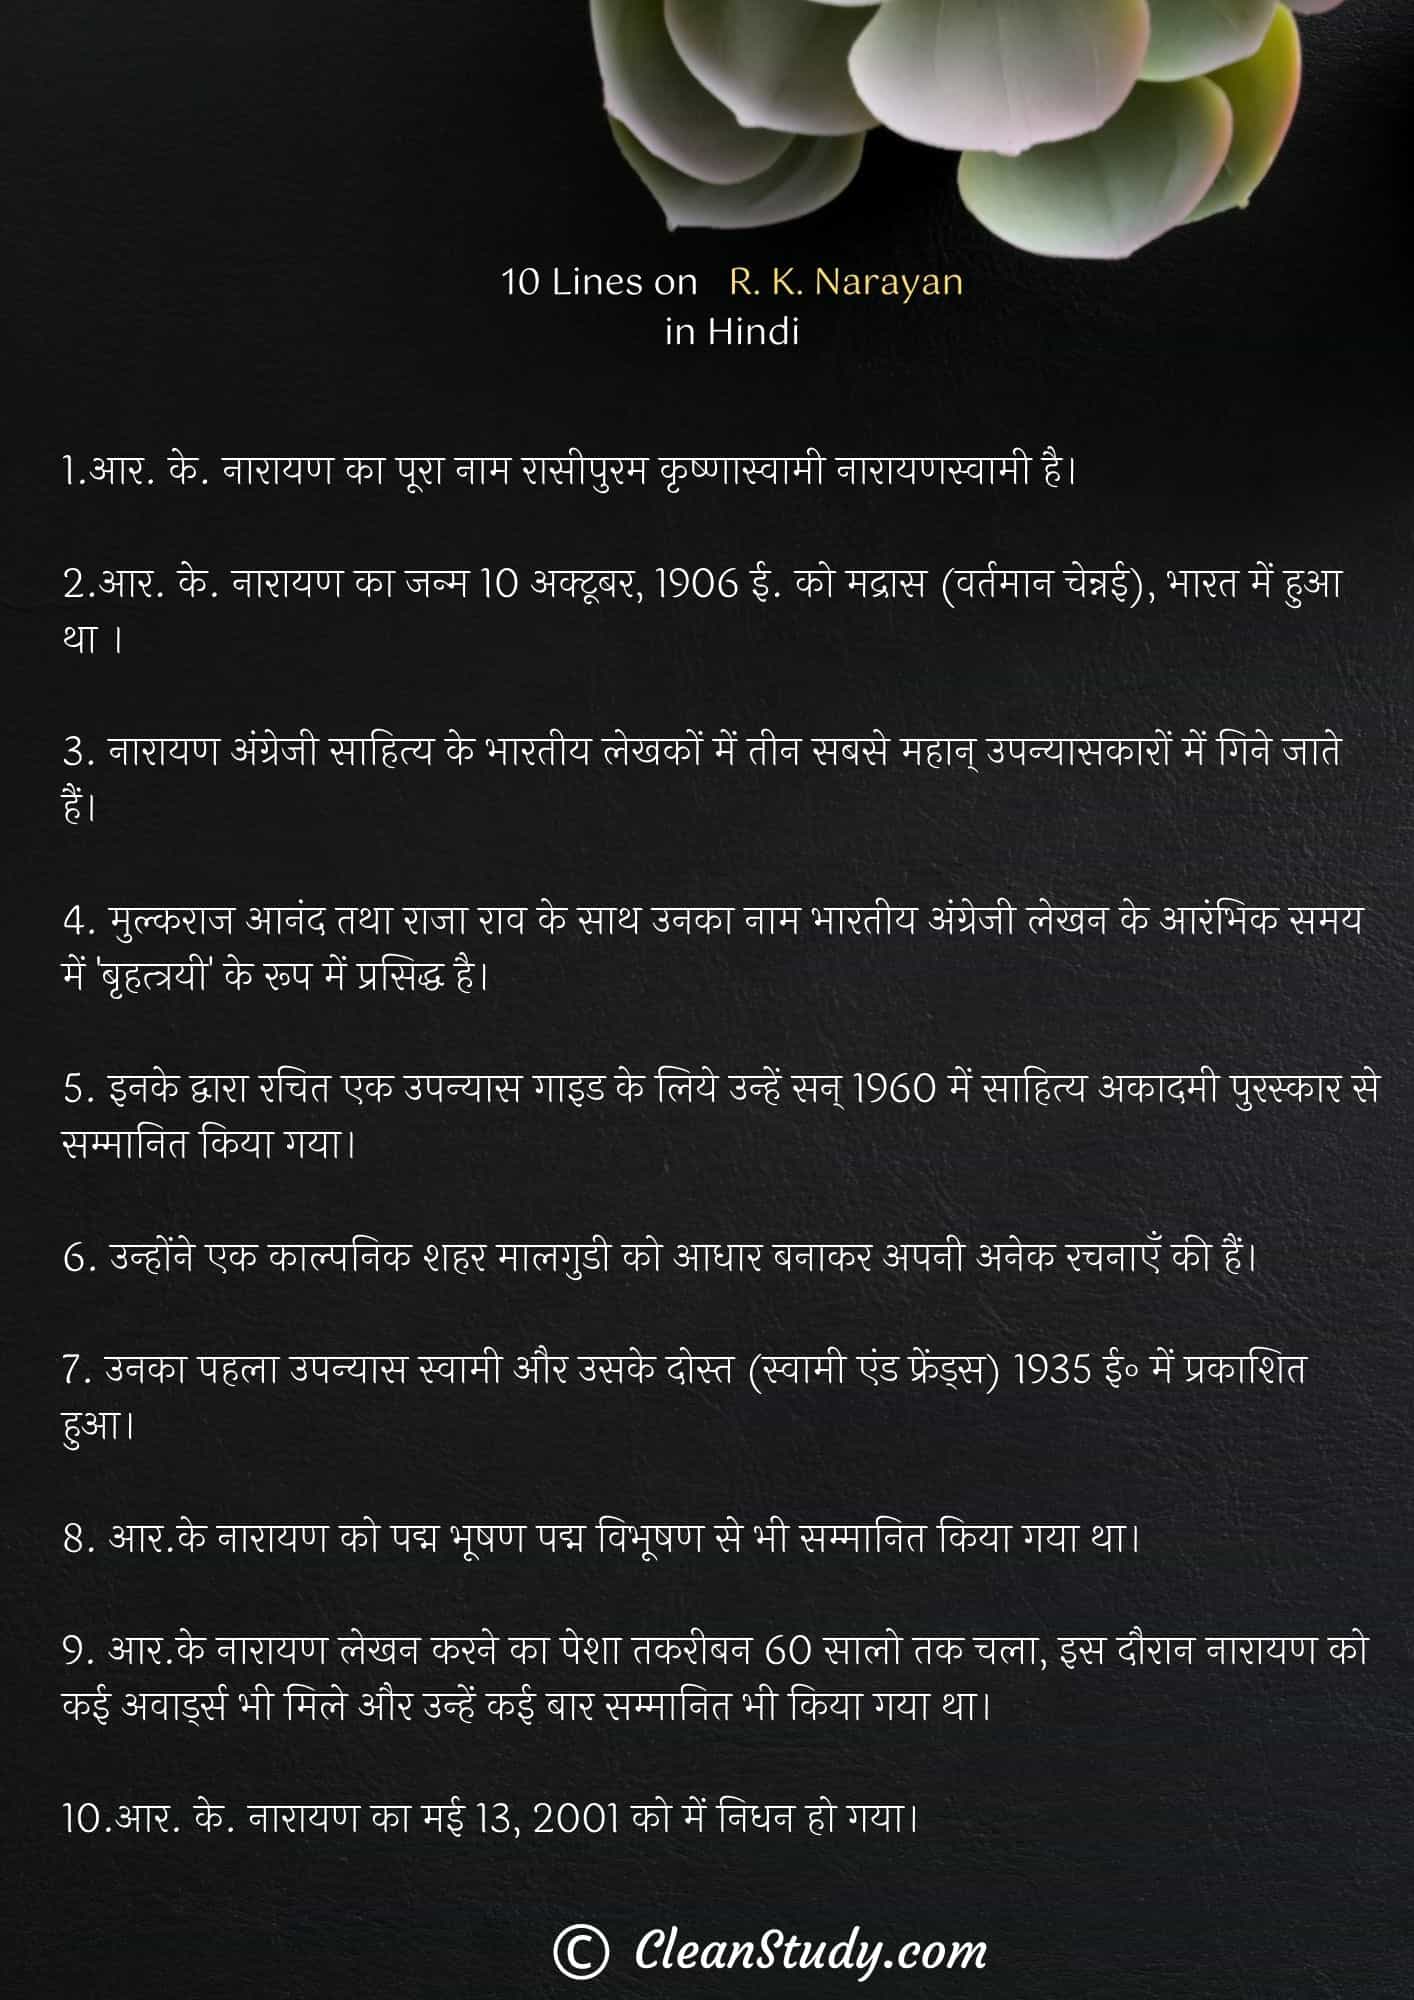 10 Lines on R. K. Narayan in Hindi